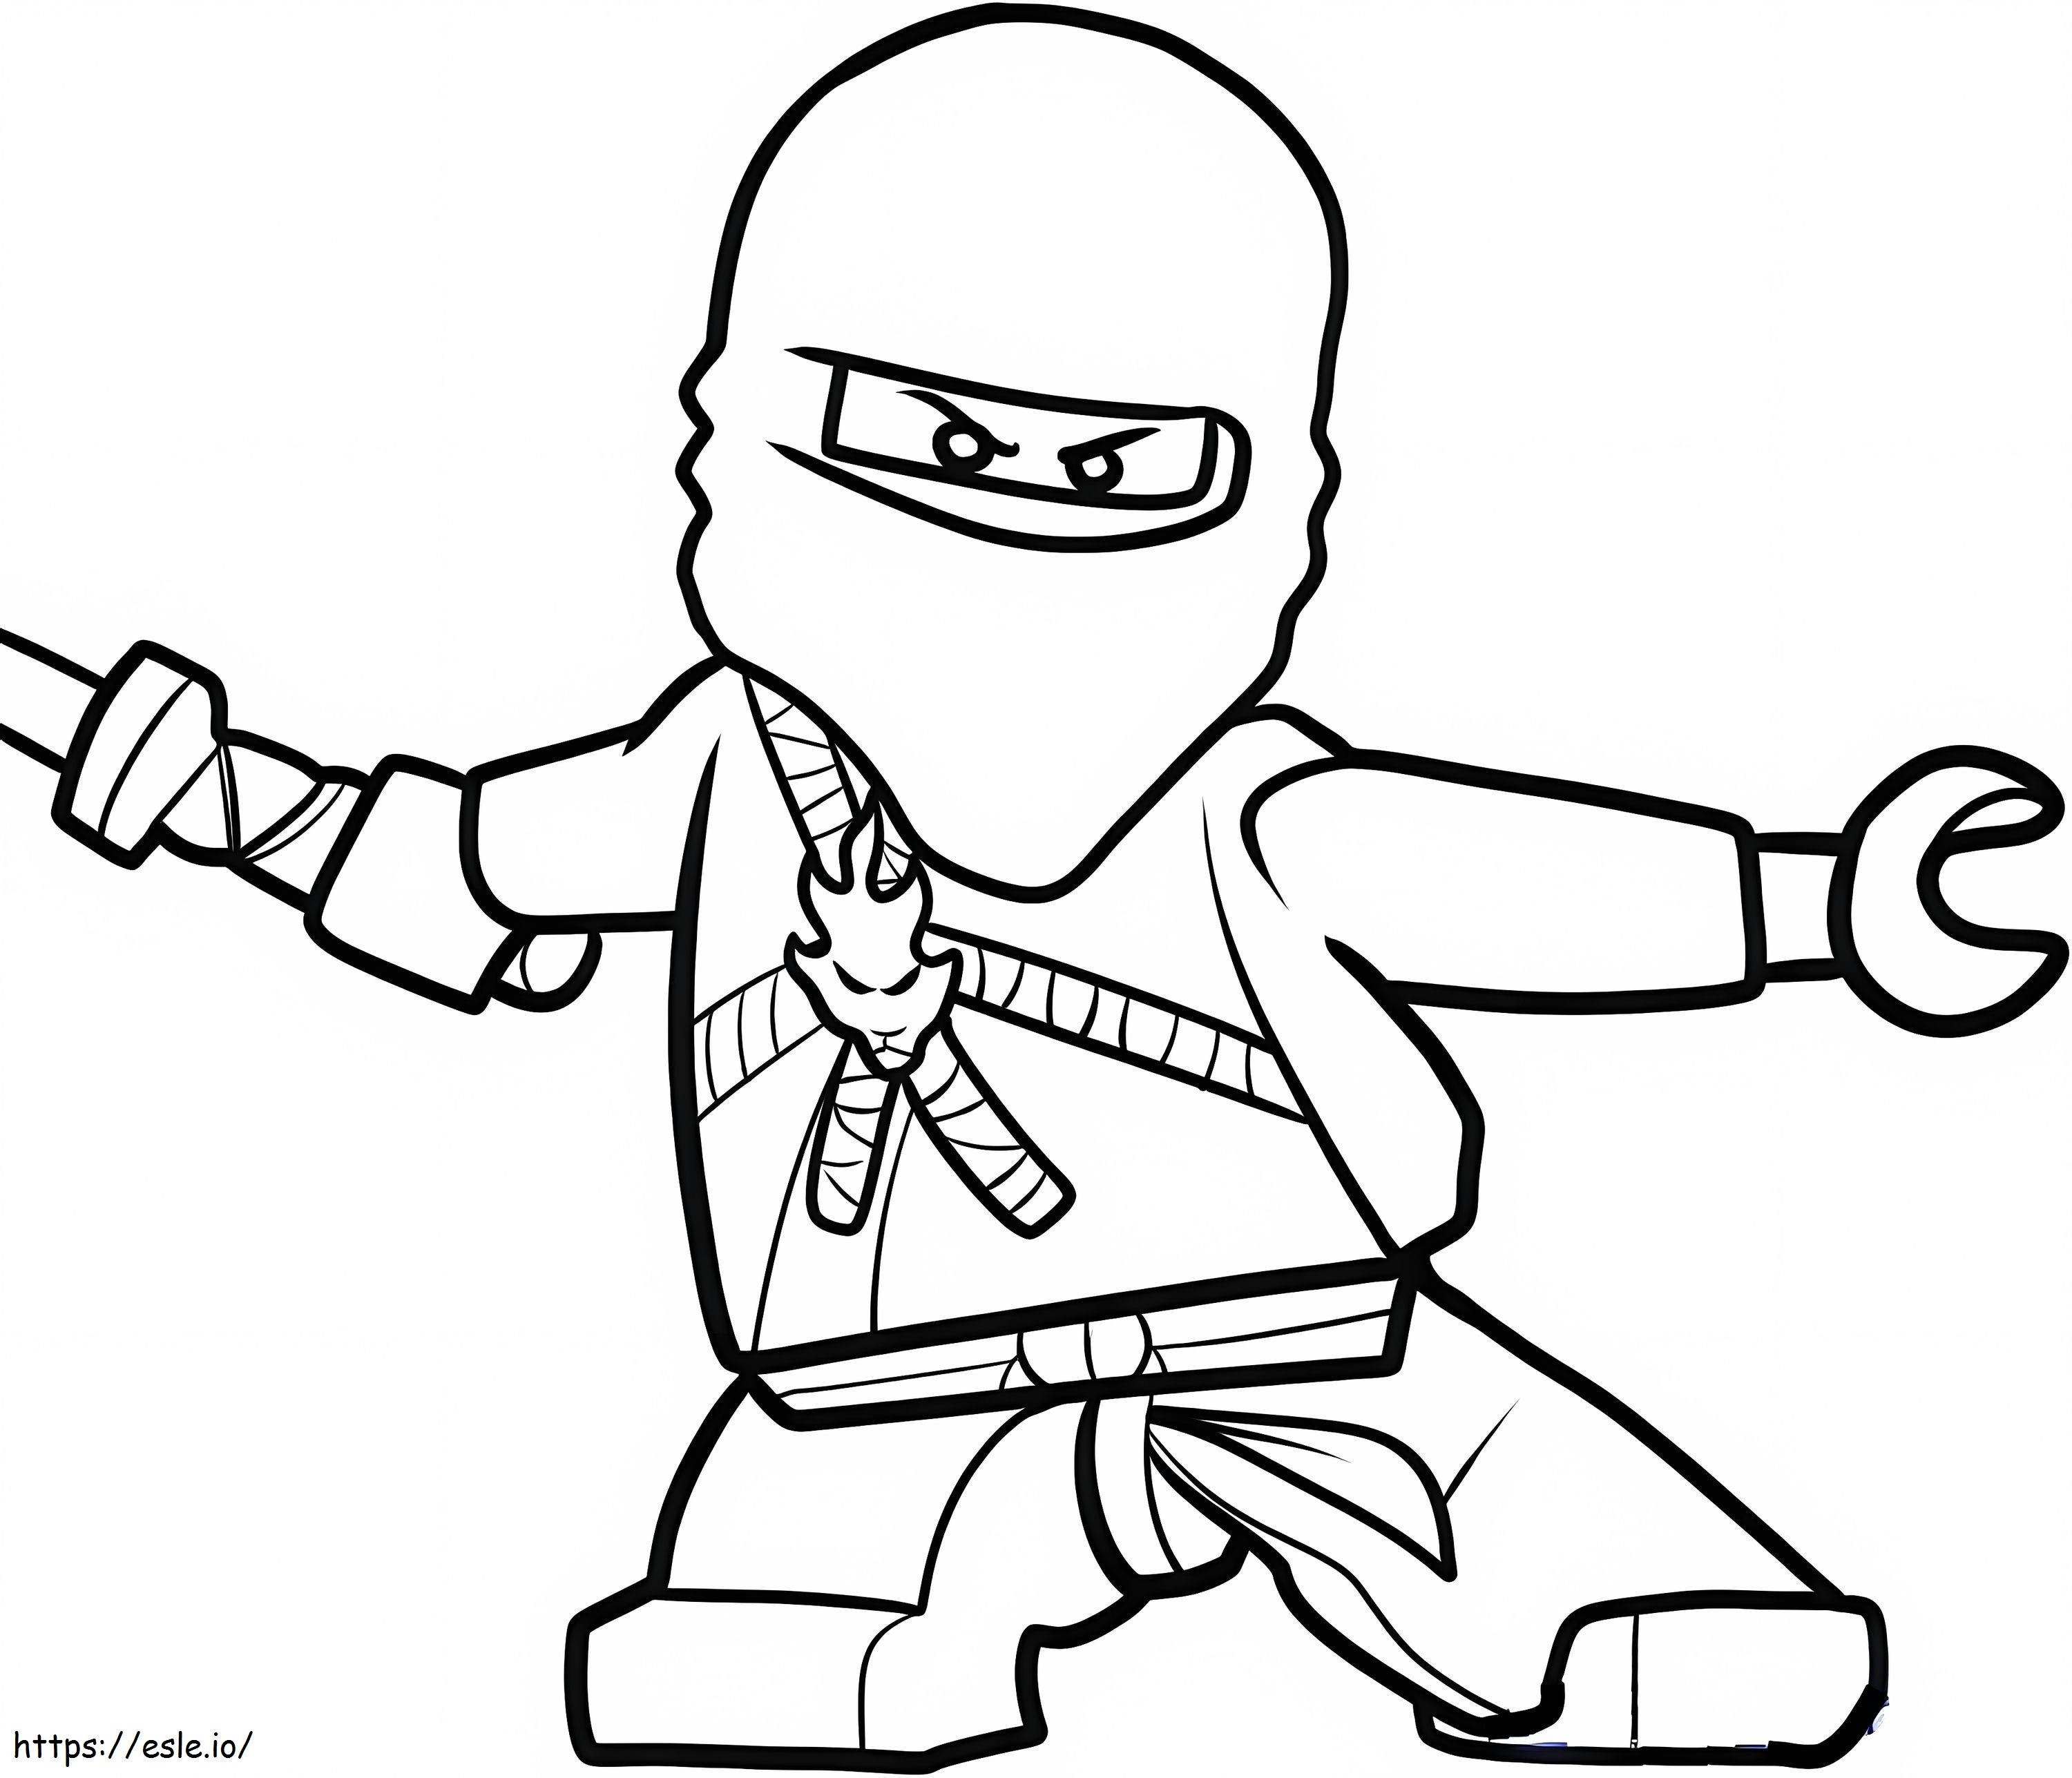 Ninja 3 coloring page